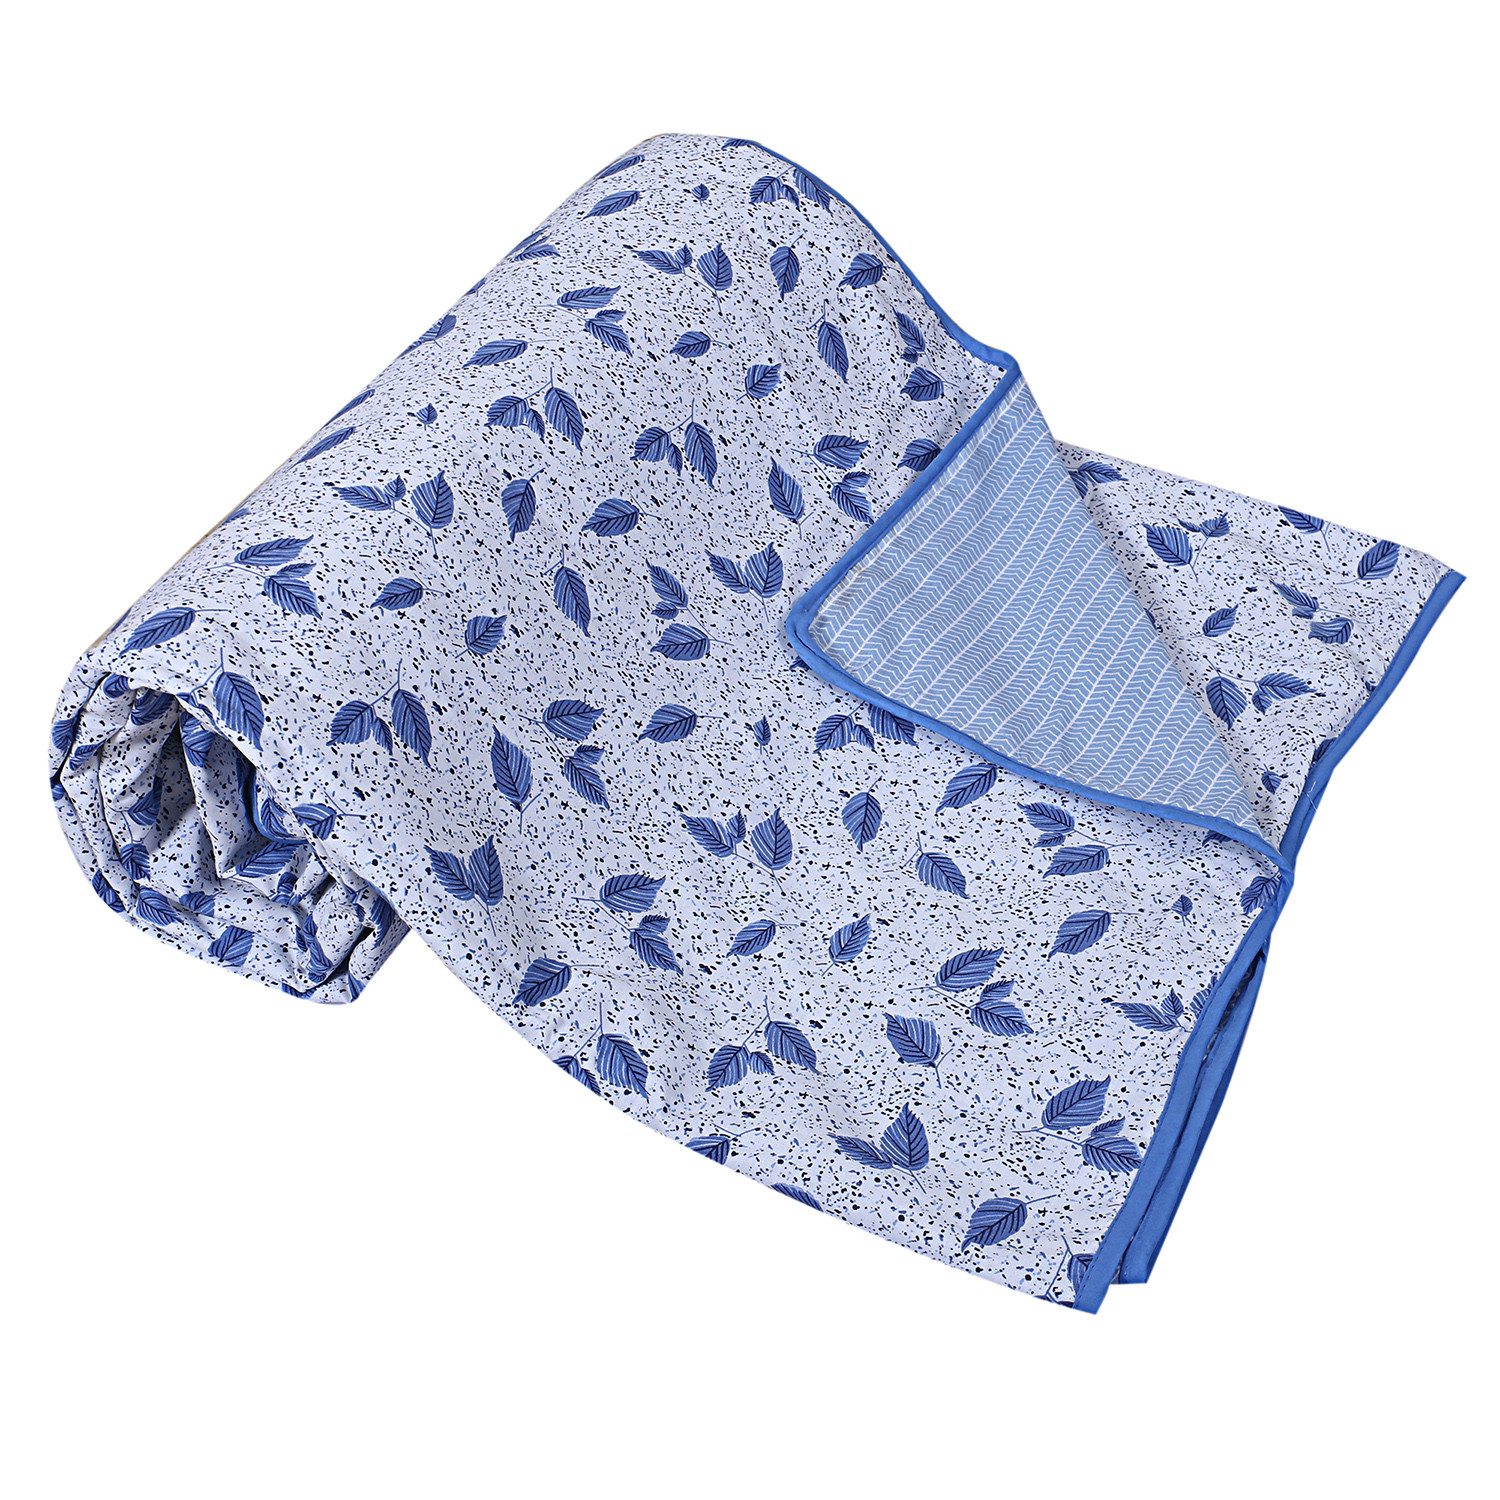 Kuber Industries Cotton Soft Lightweight Leaf Design Reversible Single Bed Dohar | Blanket | AC Quilt for Home & Travel (White)